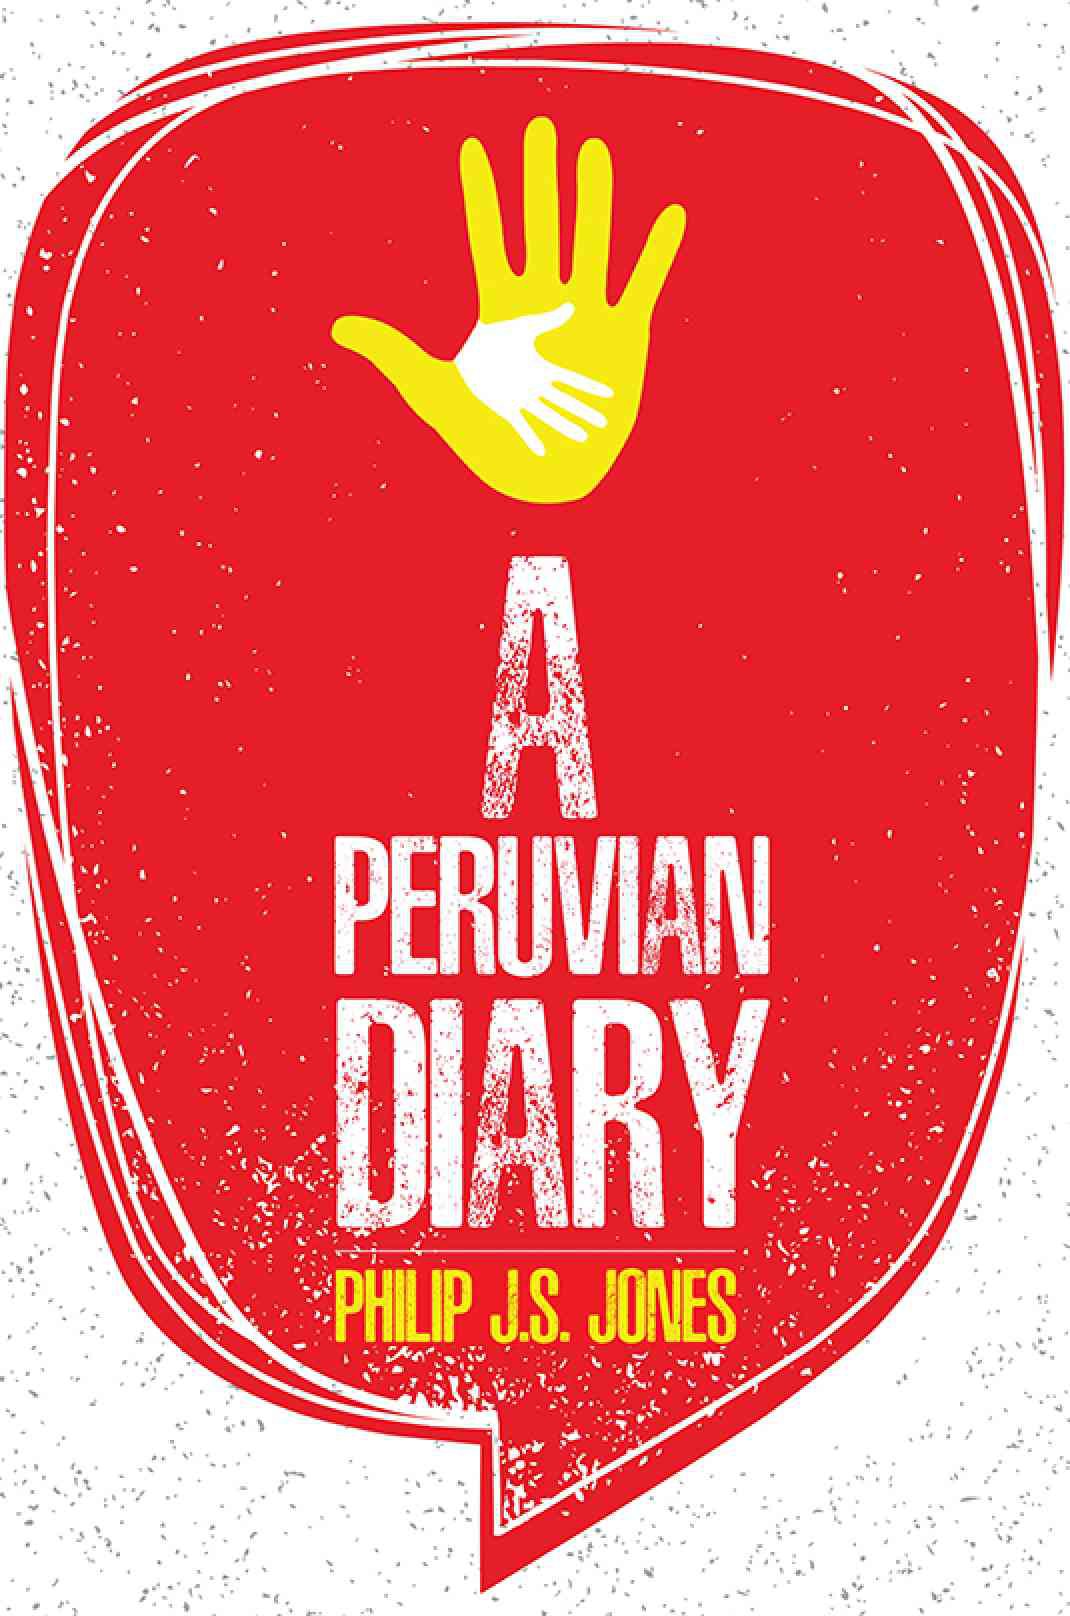 Radio Plug for ‘A Peruvian Diary’ by Philip J.S. Jones Featured on BBC Radio 2